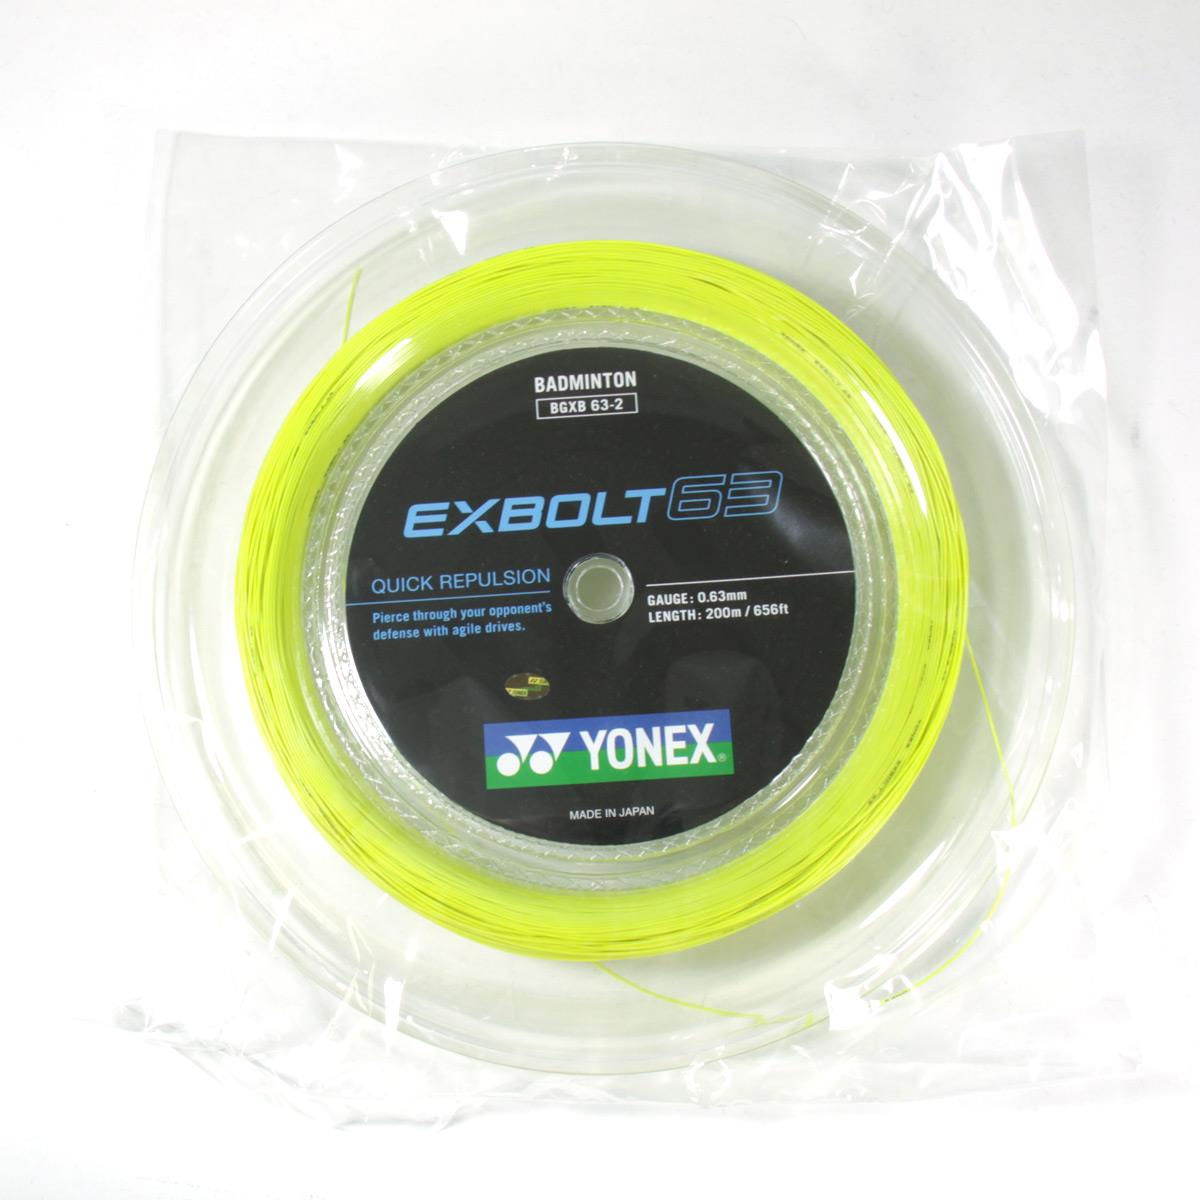 Yonex Exbolt 63 Badminton String Yellow - 0.63mm 200m Reel